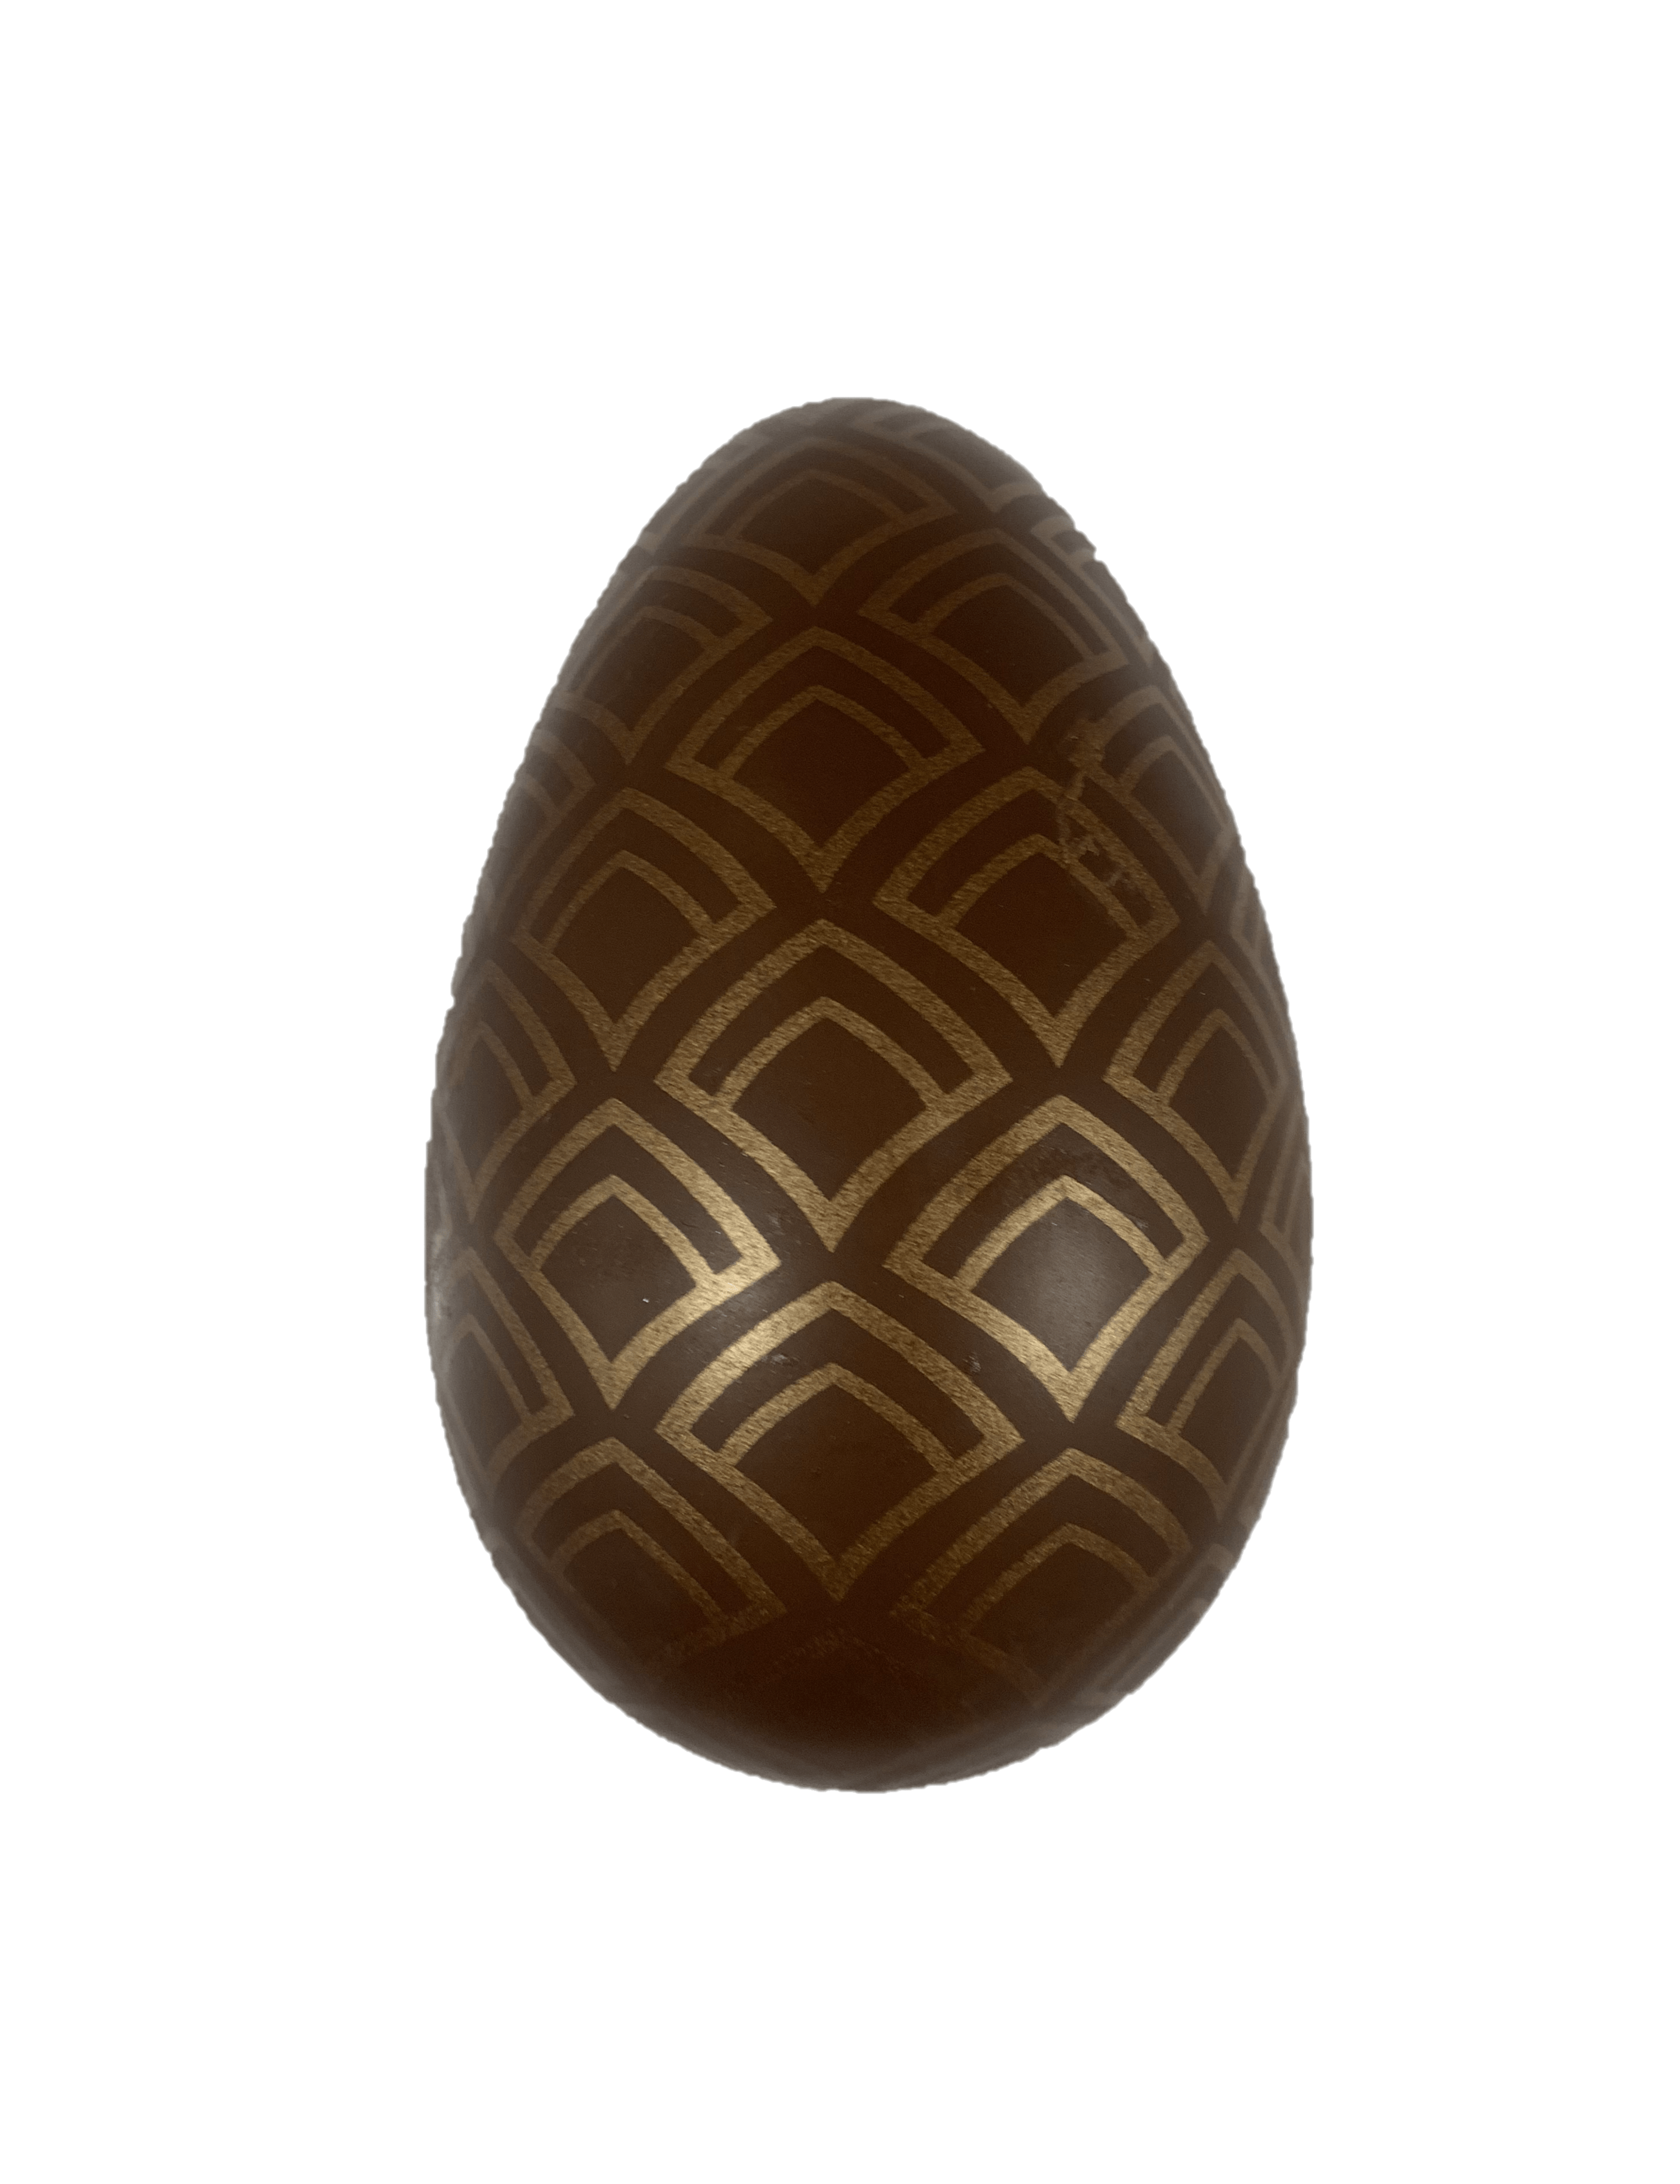 Easter-Egg-Art-Deco-Unpackaged-min.png